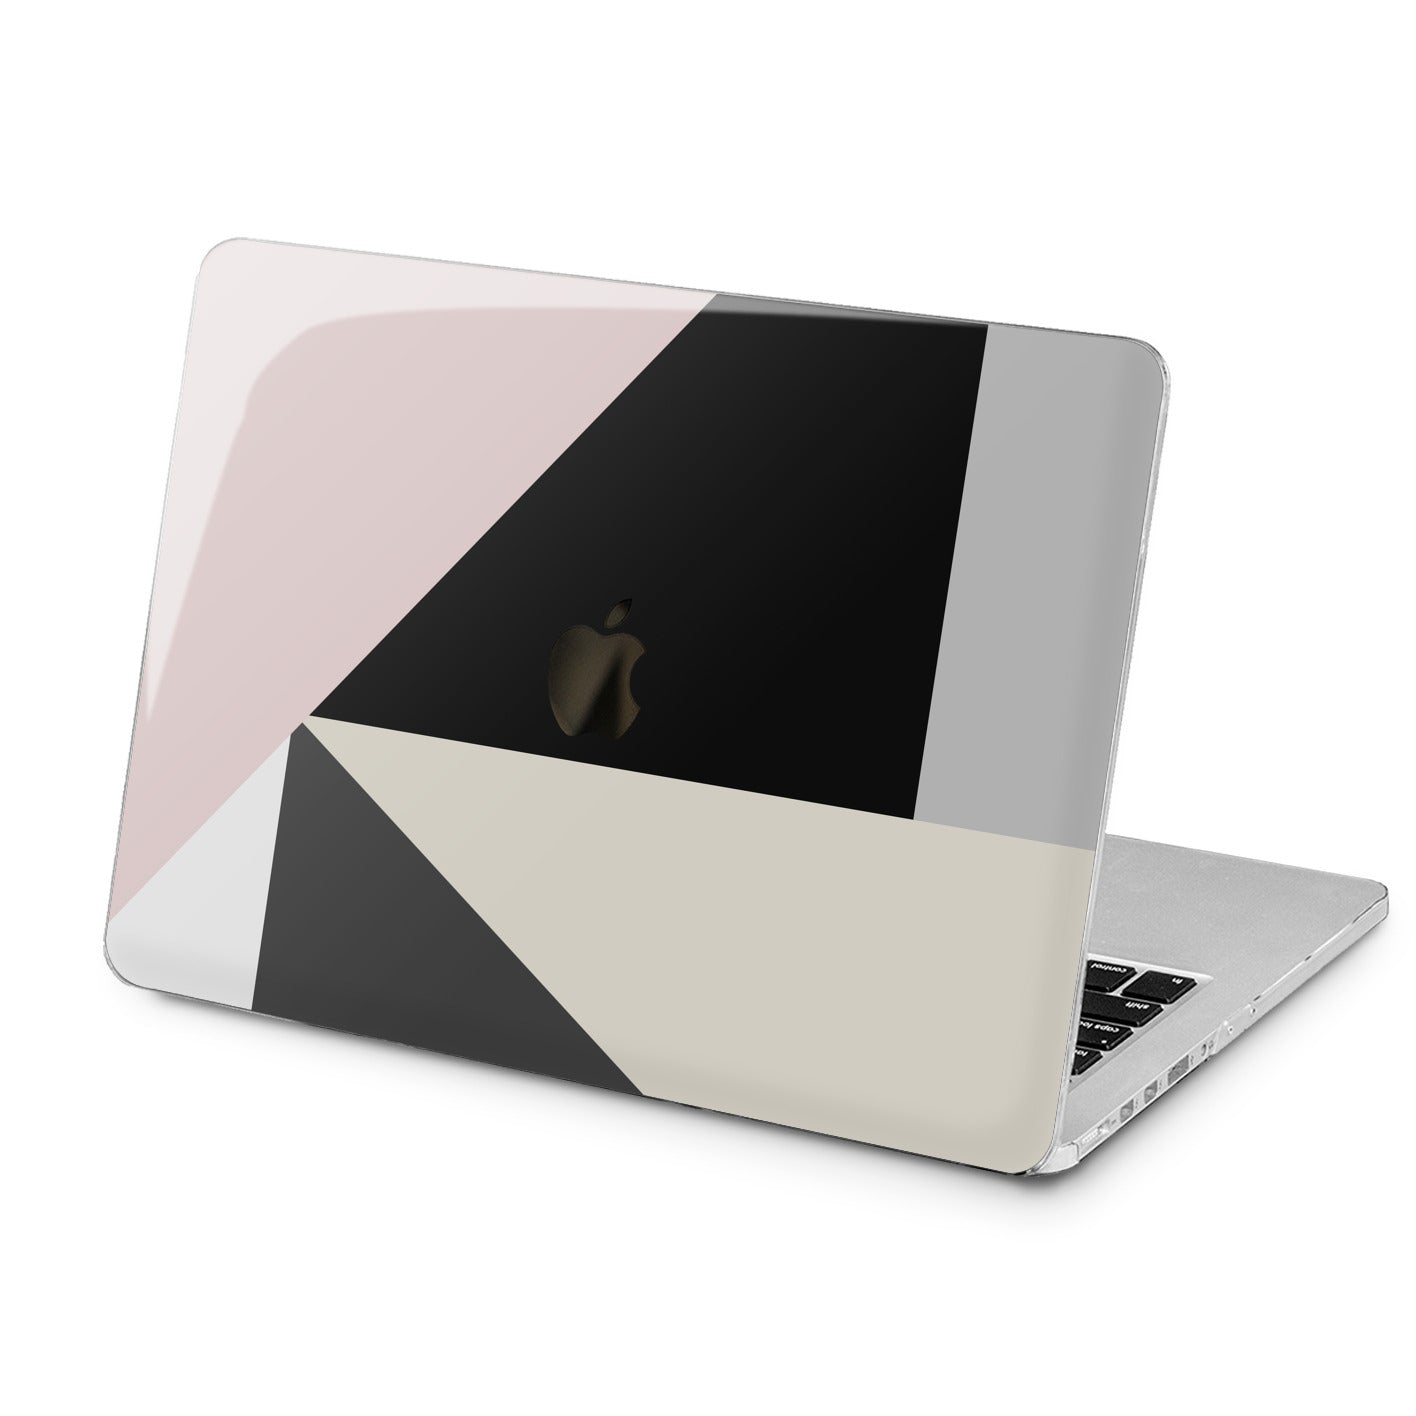 Lex Altern Lex Altern Minimal Design Case for your Laptop Apple Macbook.